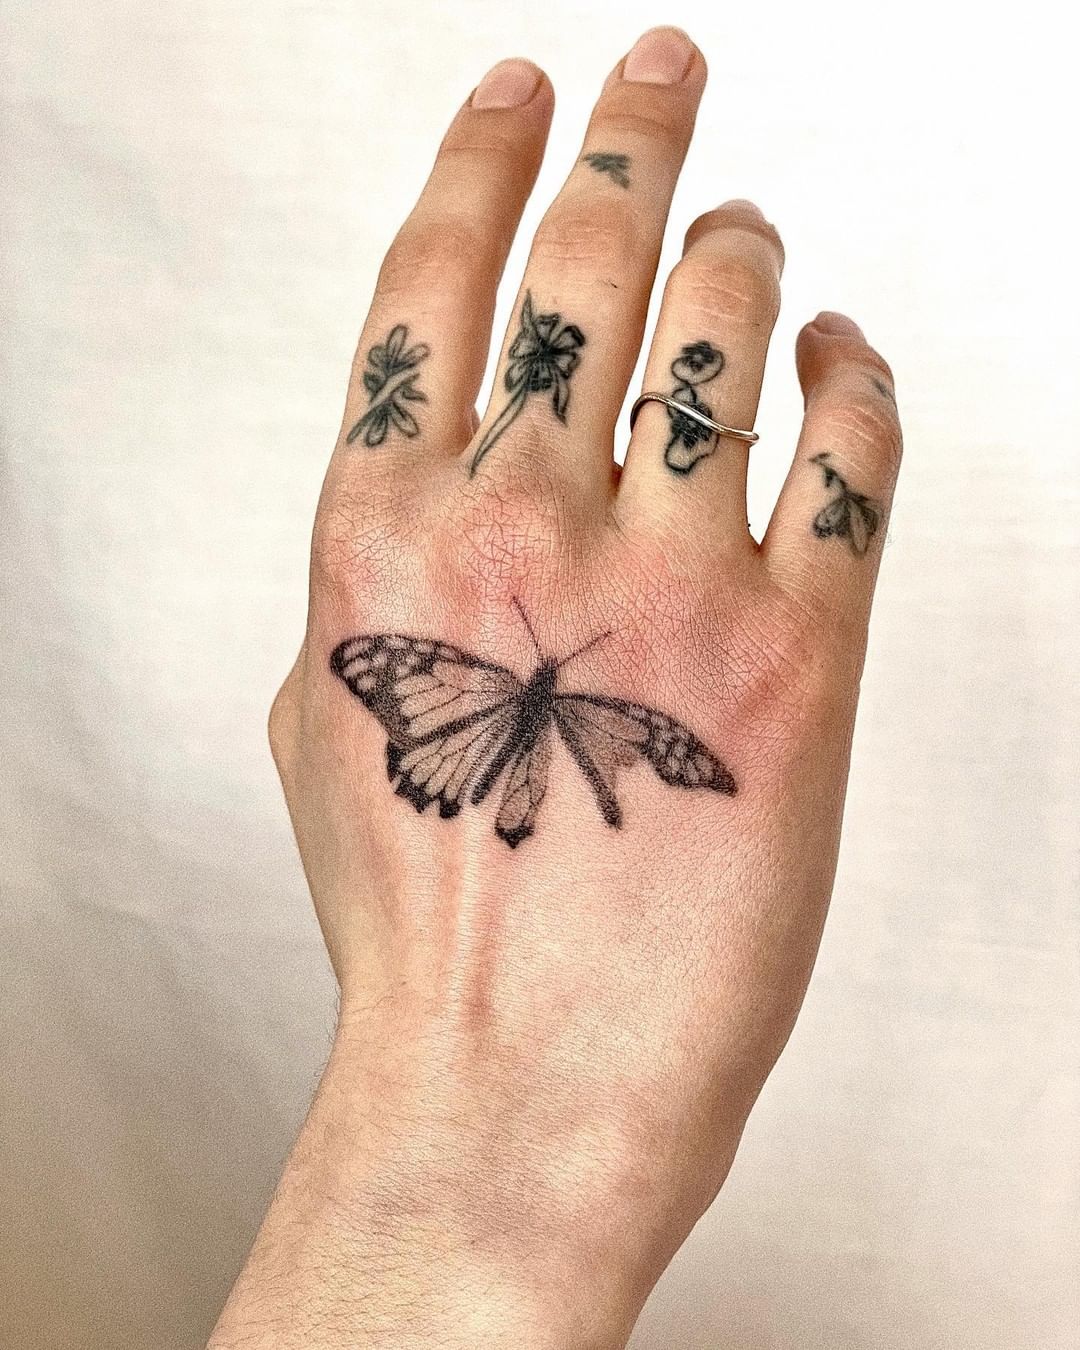 Diseño de tatuaje de mariposa en el brazo